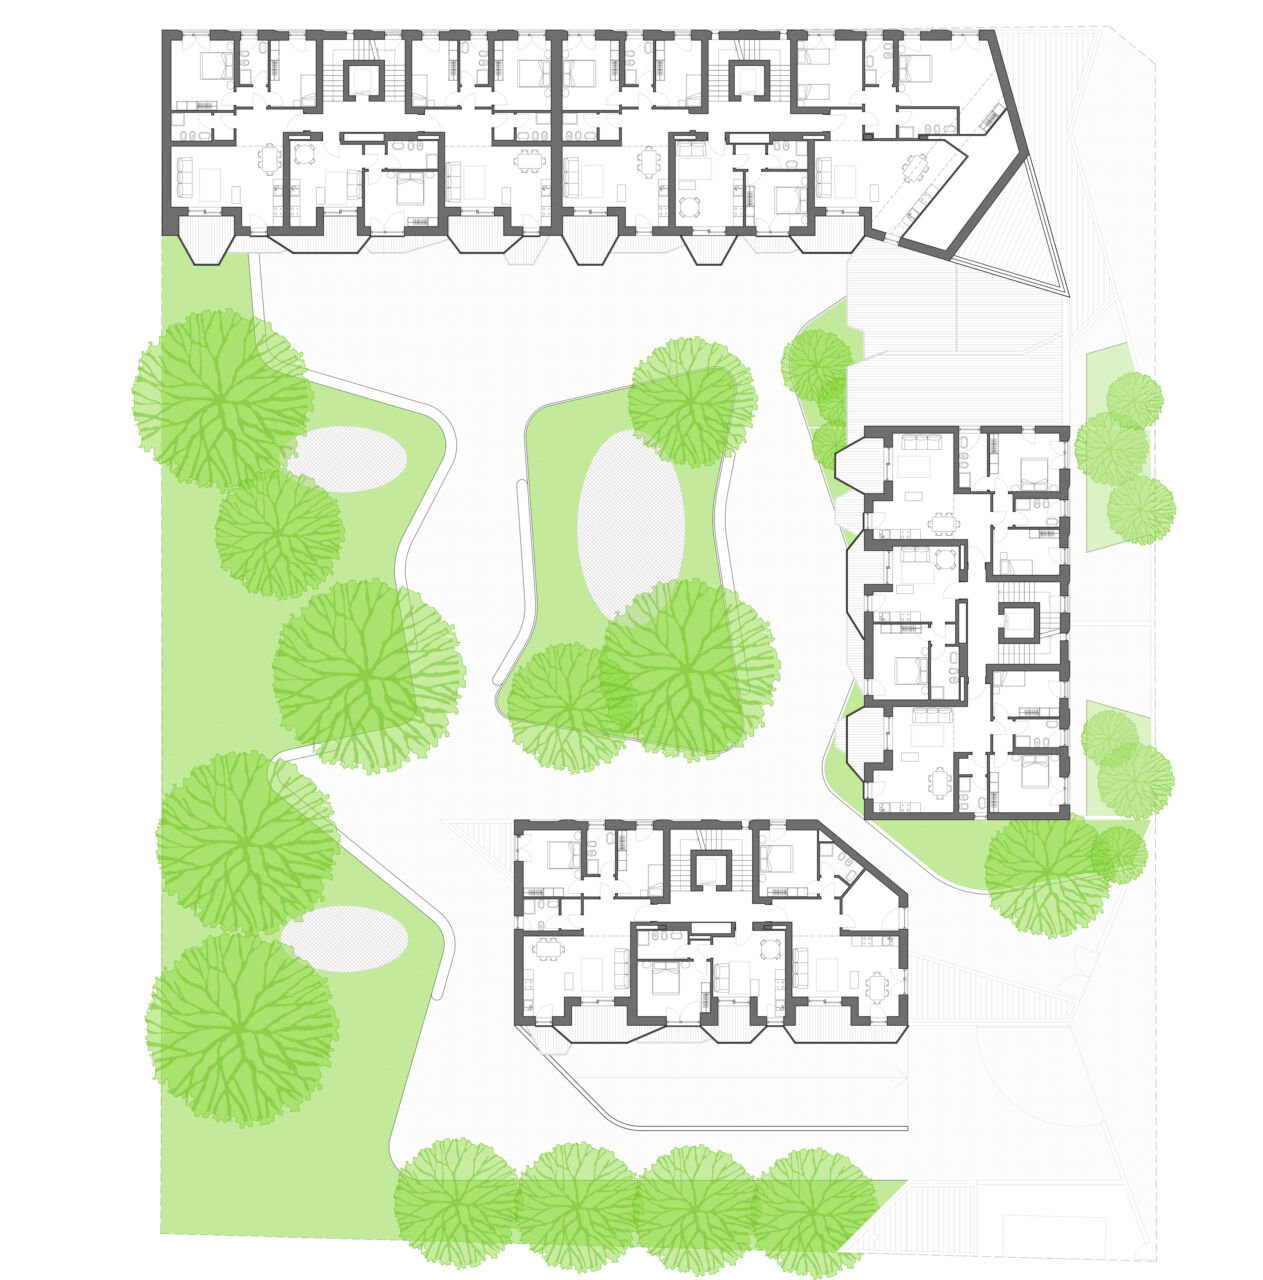 2/9 Valtorta Residential Complex, typical floor plan